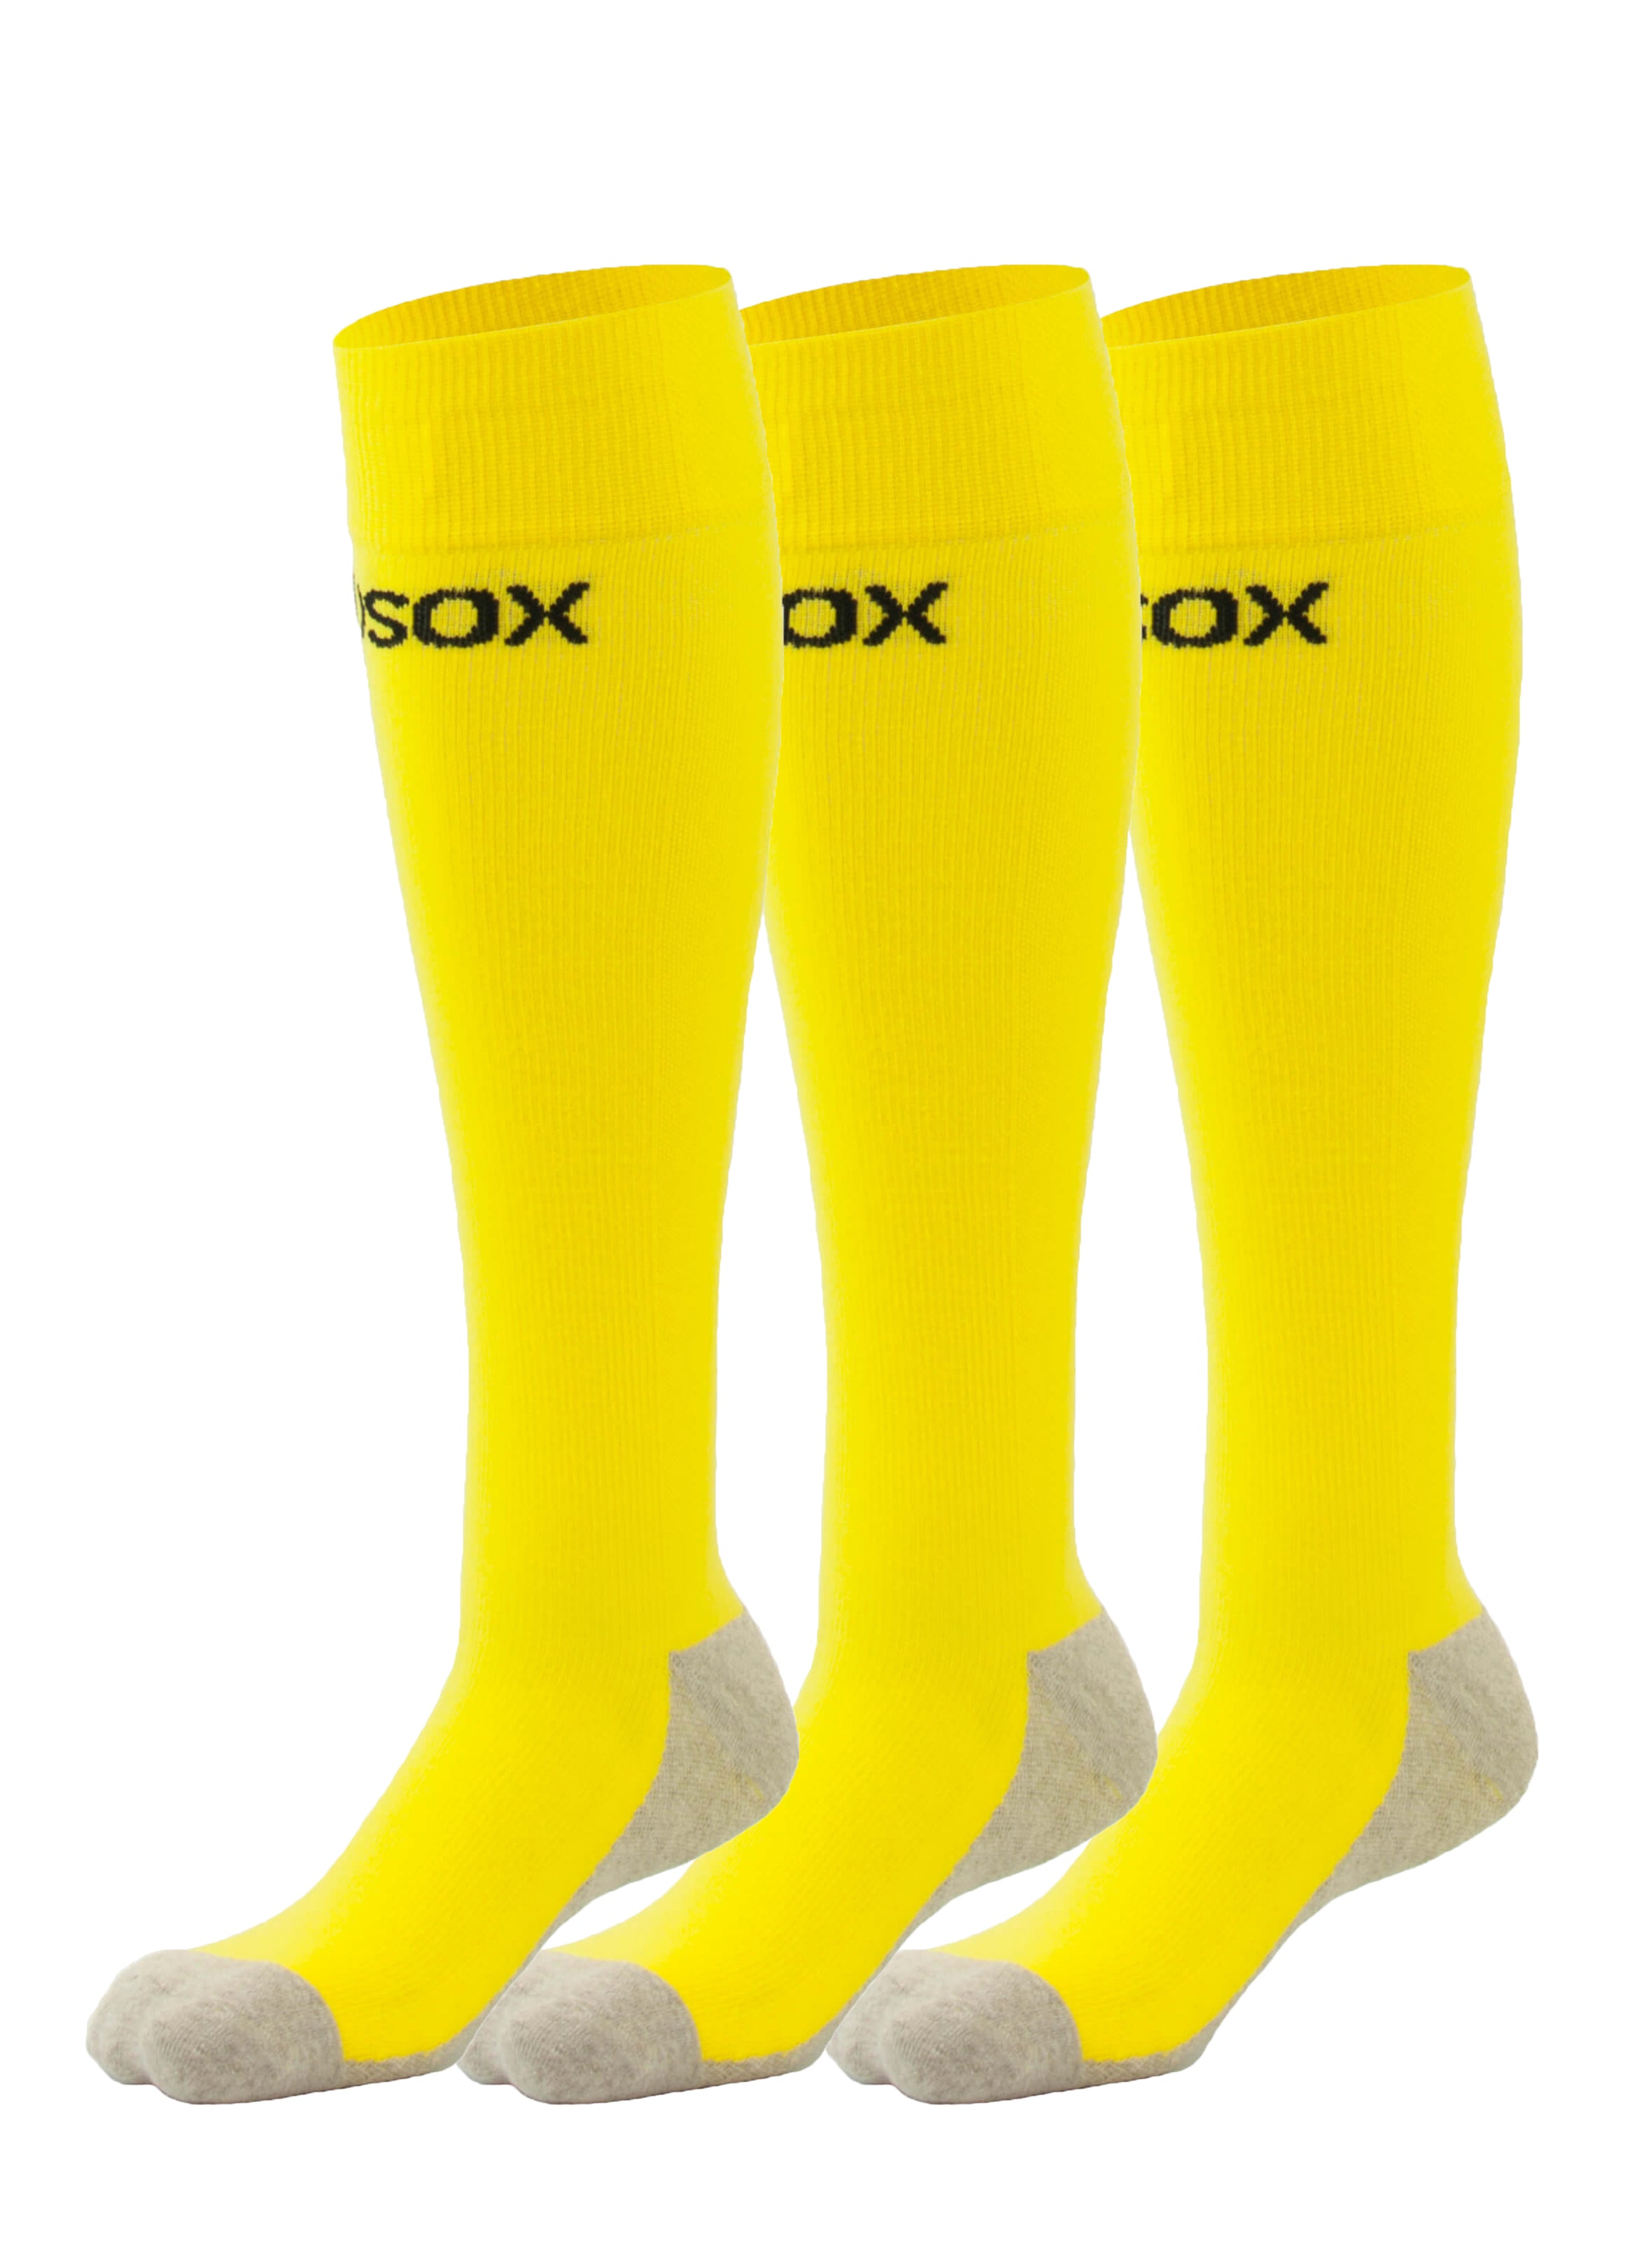 MDSOX 20-30mmHg 3PACK - Yellow